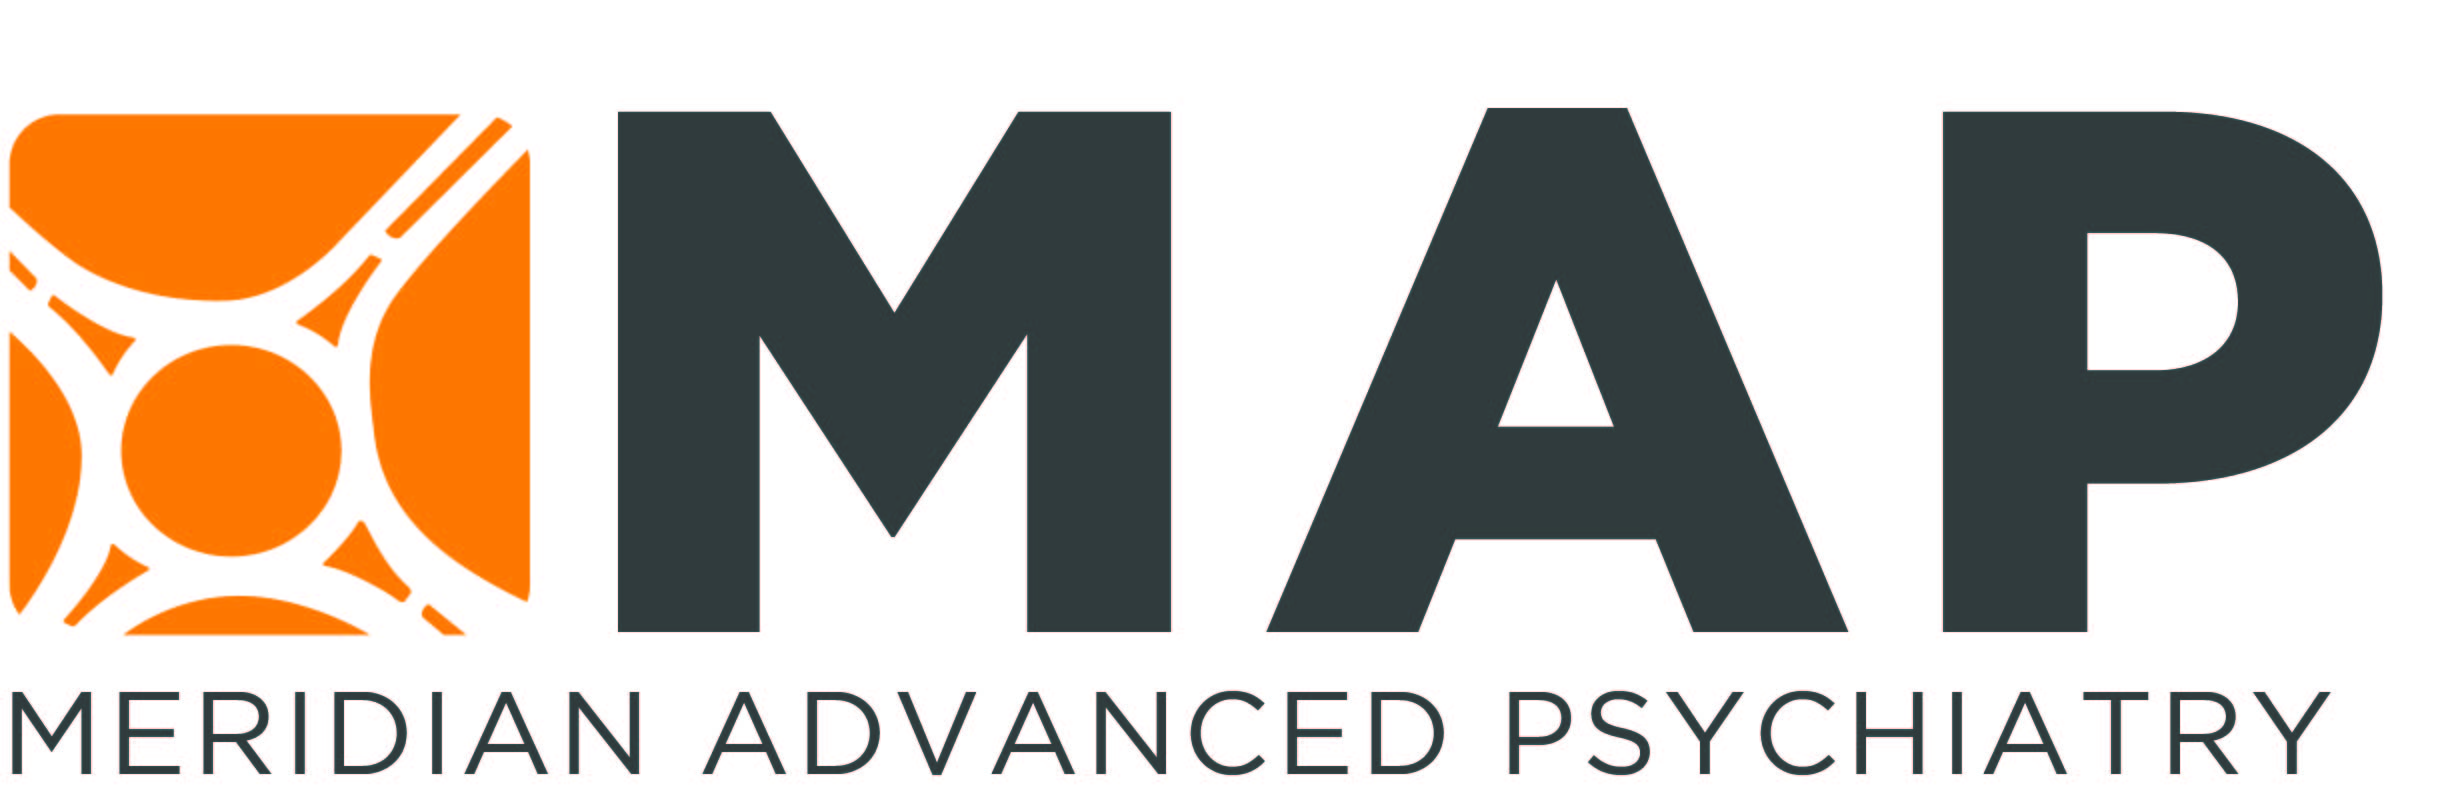 Meridian Advanced Psychiatry logo